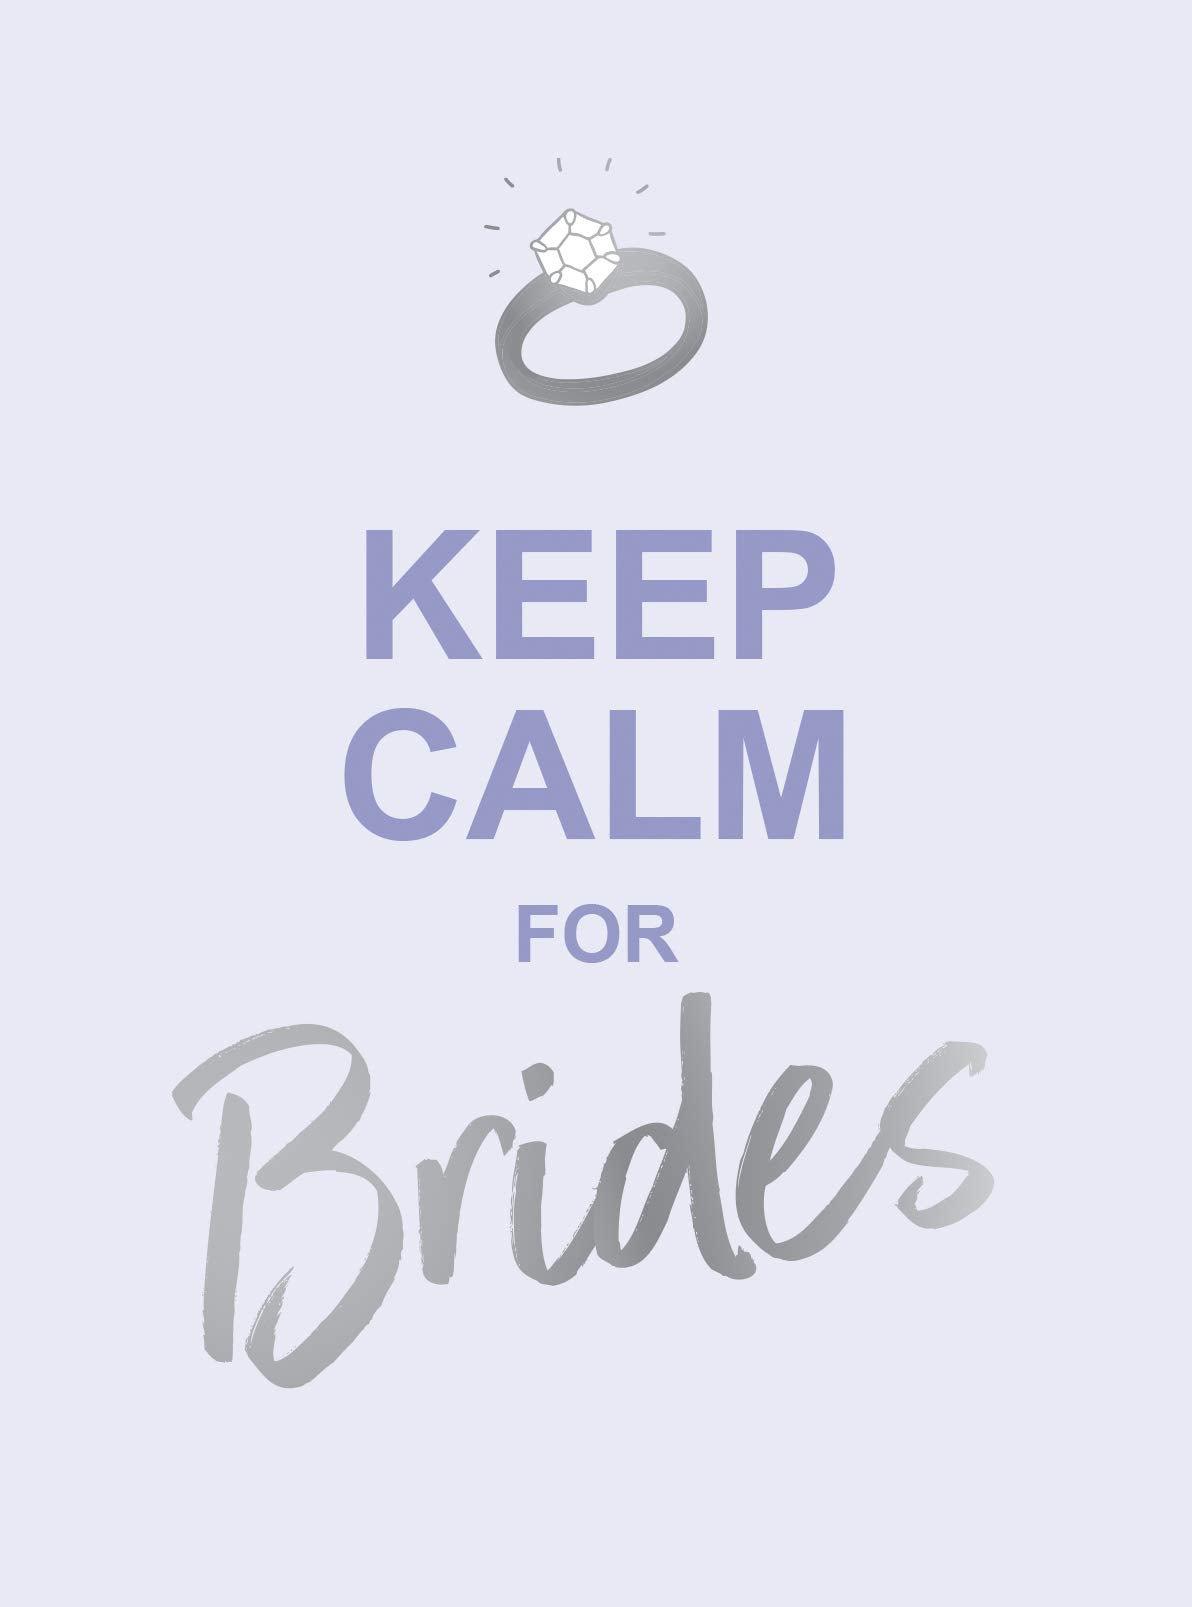 Keep Calm for Brides: Quotes to Calm Pre-Wedding Nerves